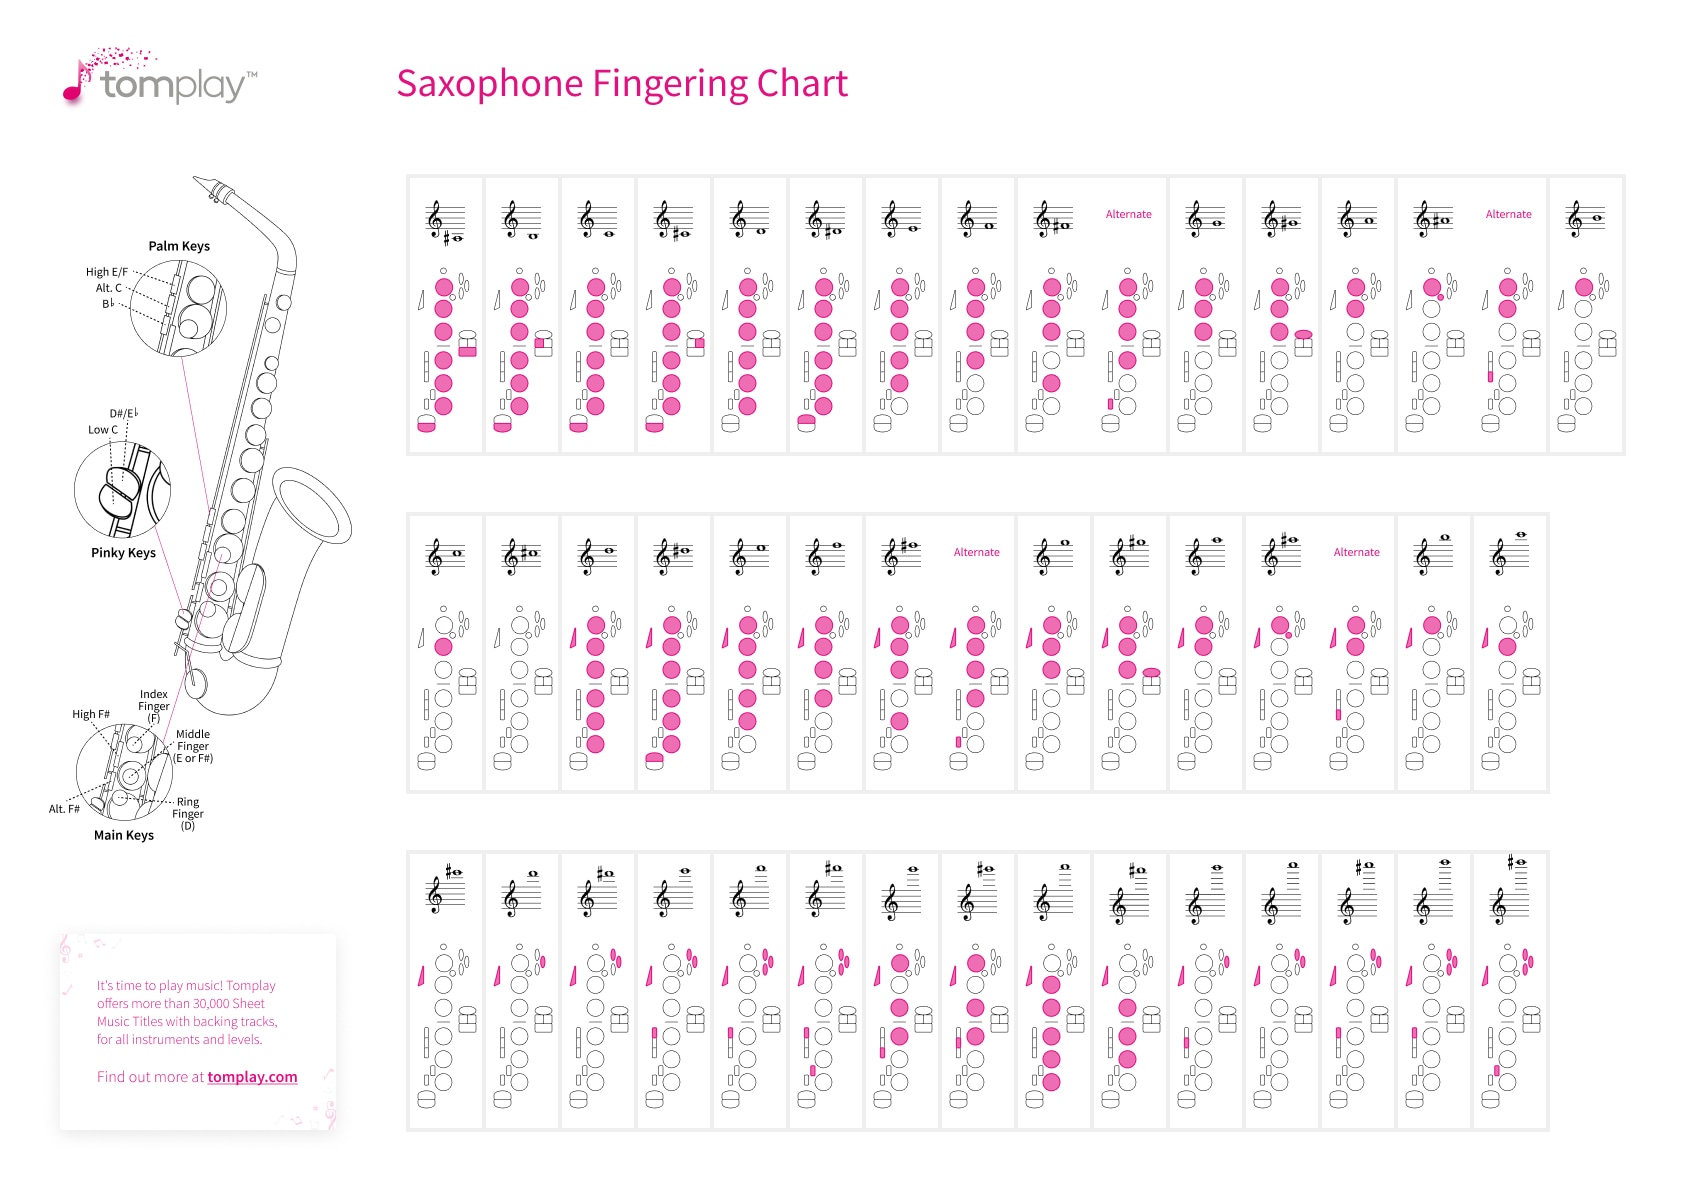 alto saxophone fingering chart